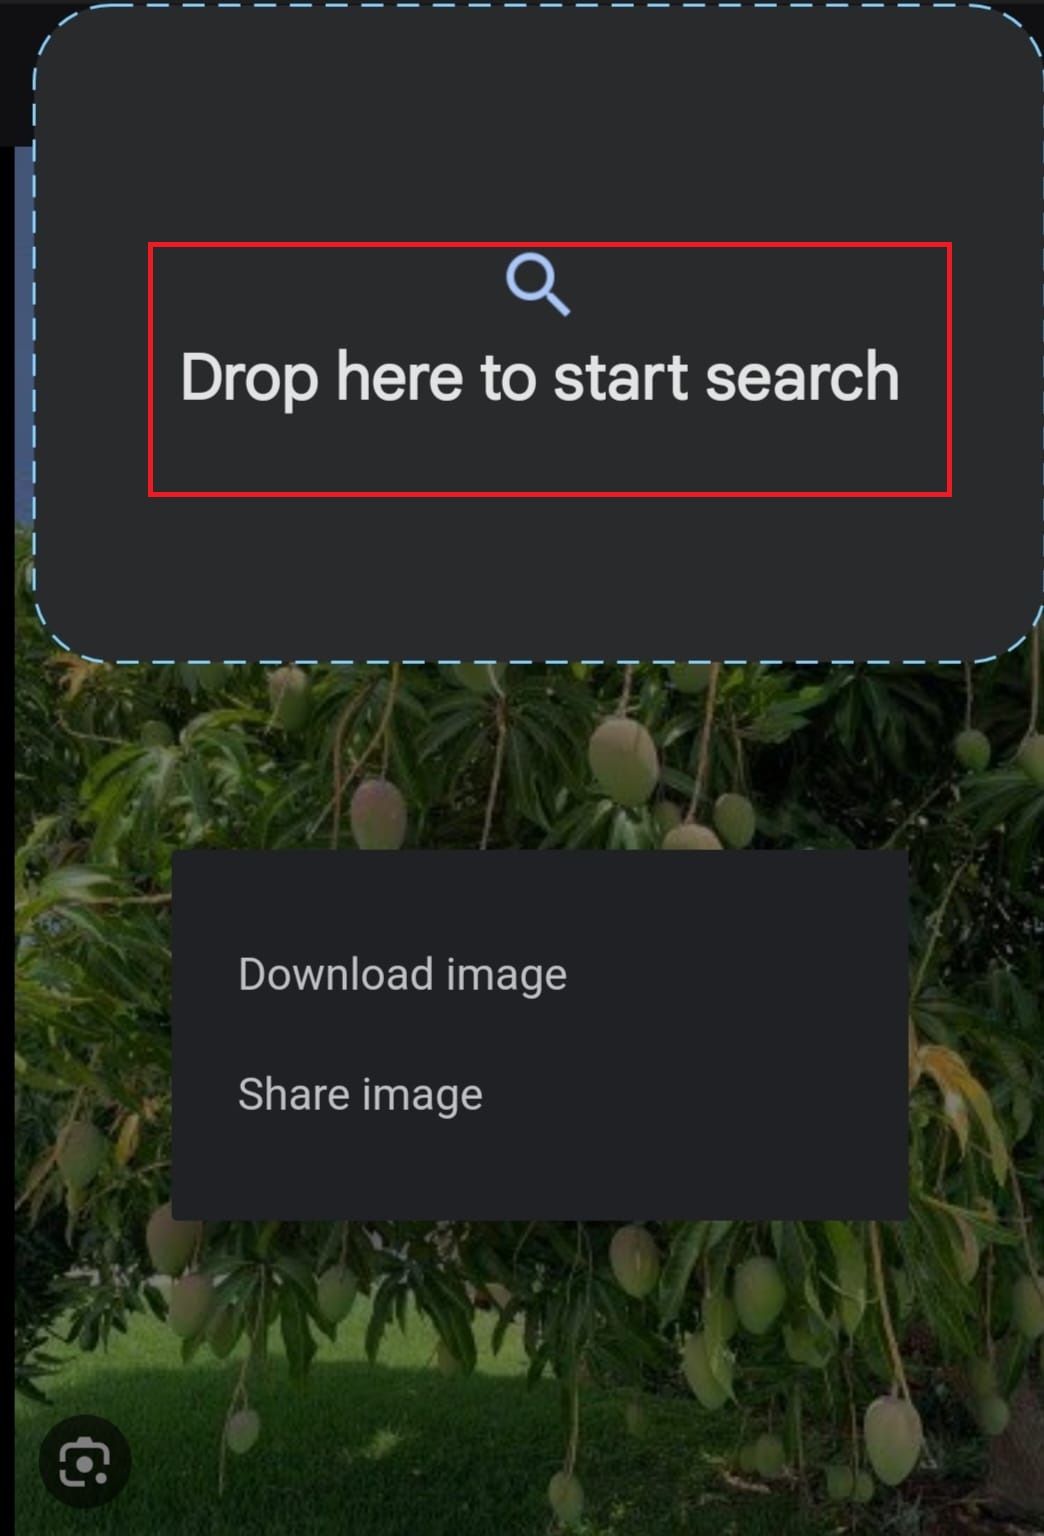 Google Reverse Image Search in Desktop & Mobile Phone